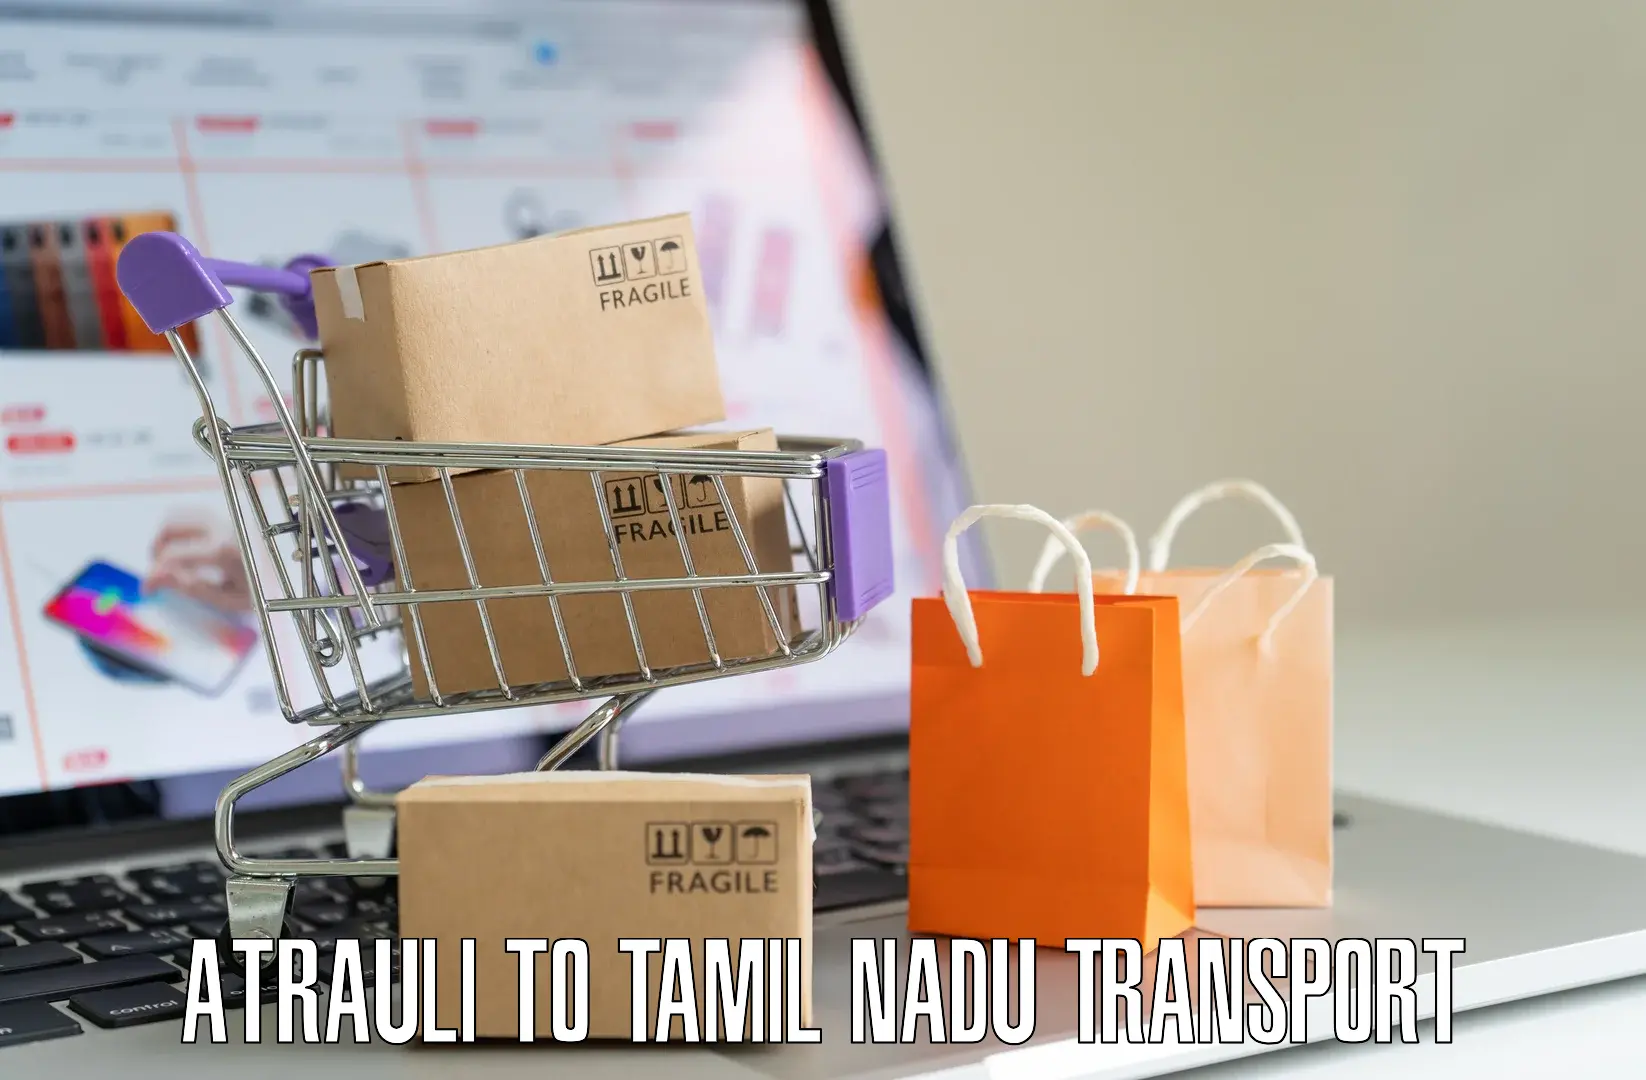 Transport bike from one state to another Atrauli to Tamil Nadu